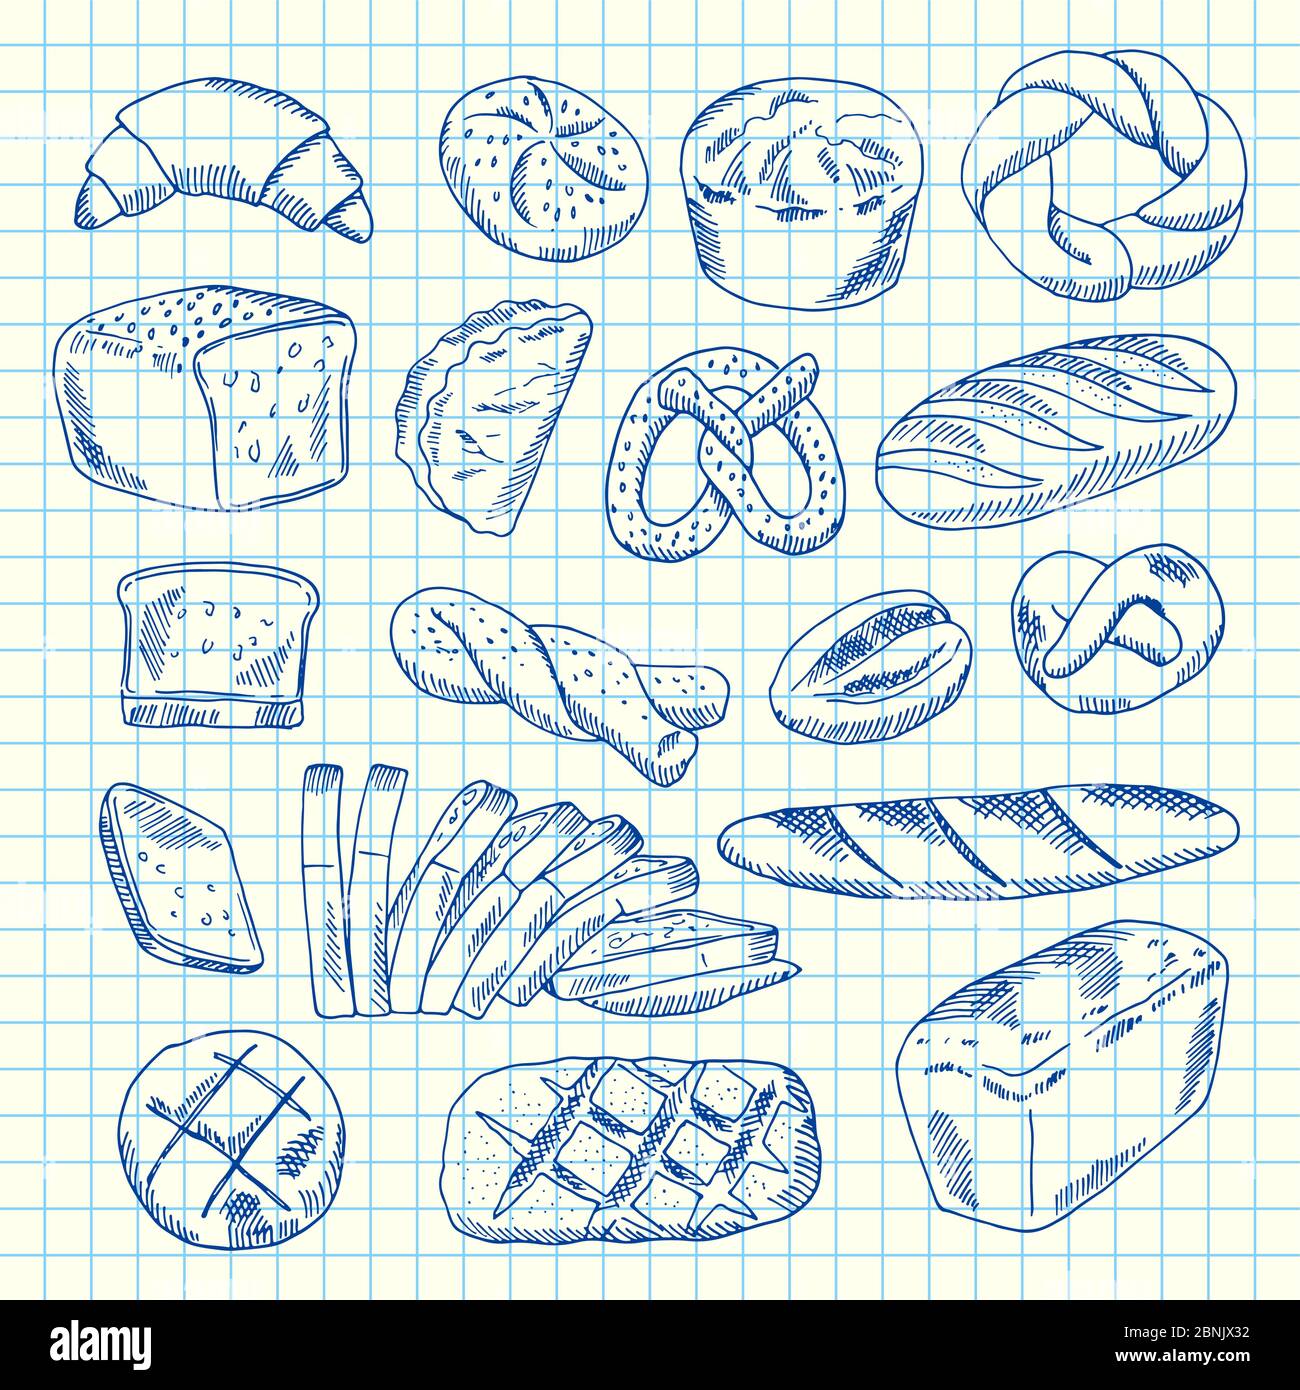 Vector hand drawn contoured bakery elements Stock Vector